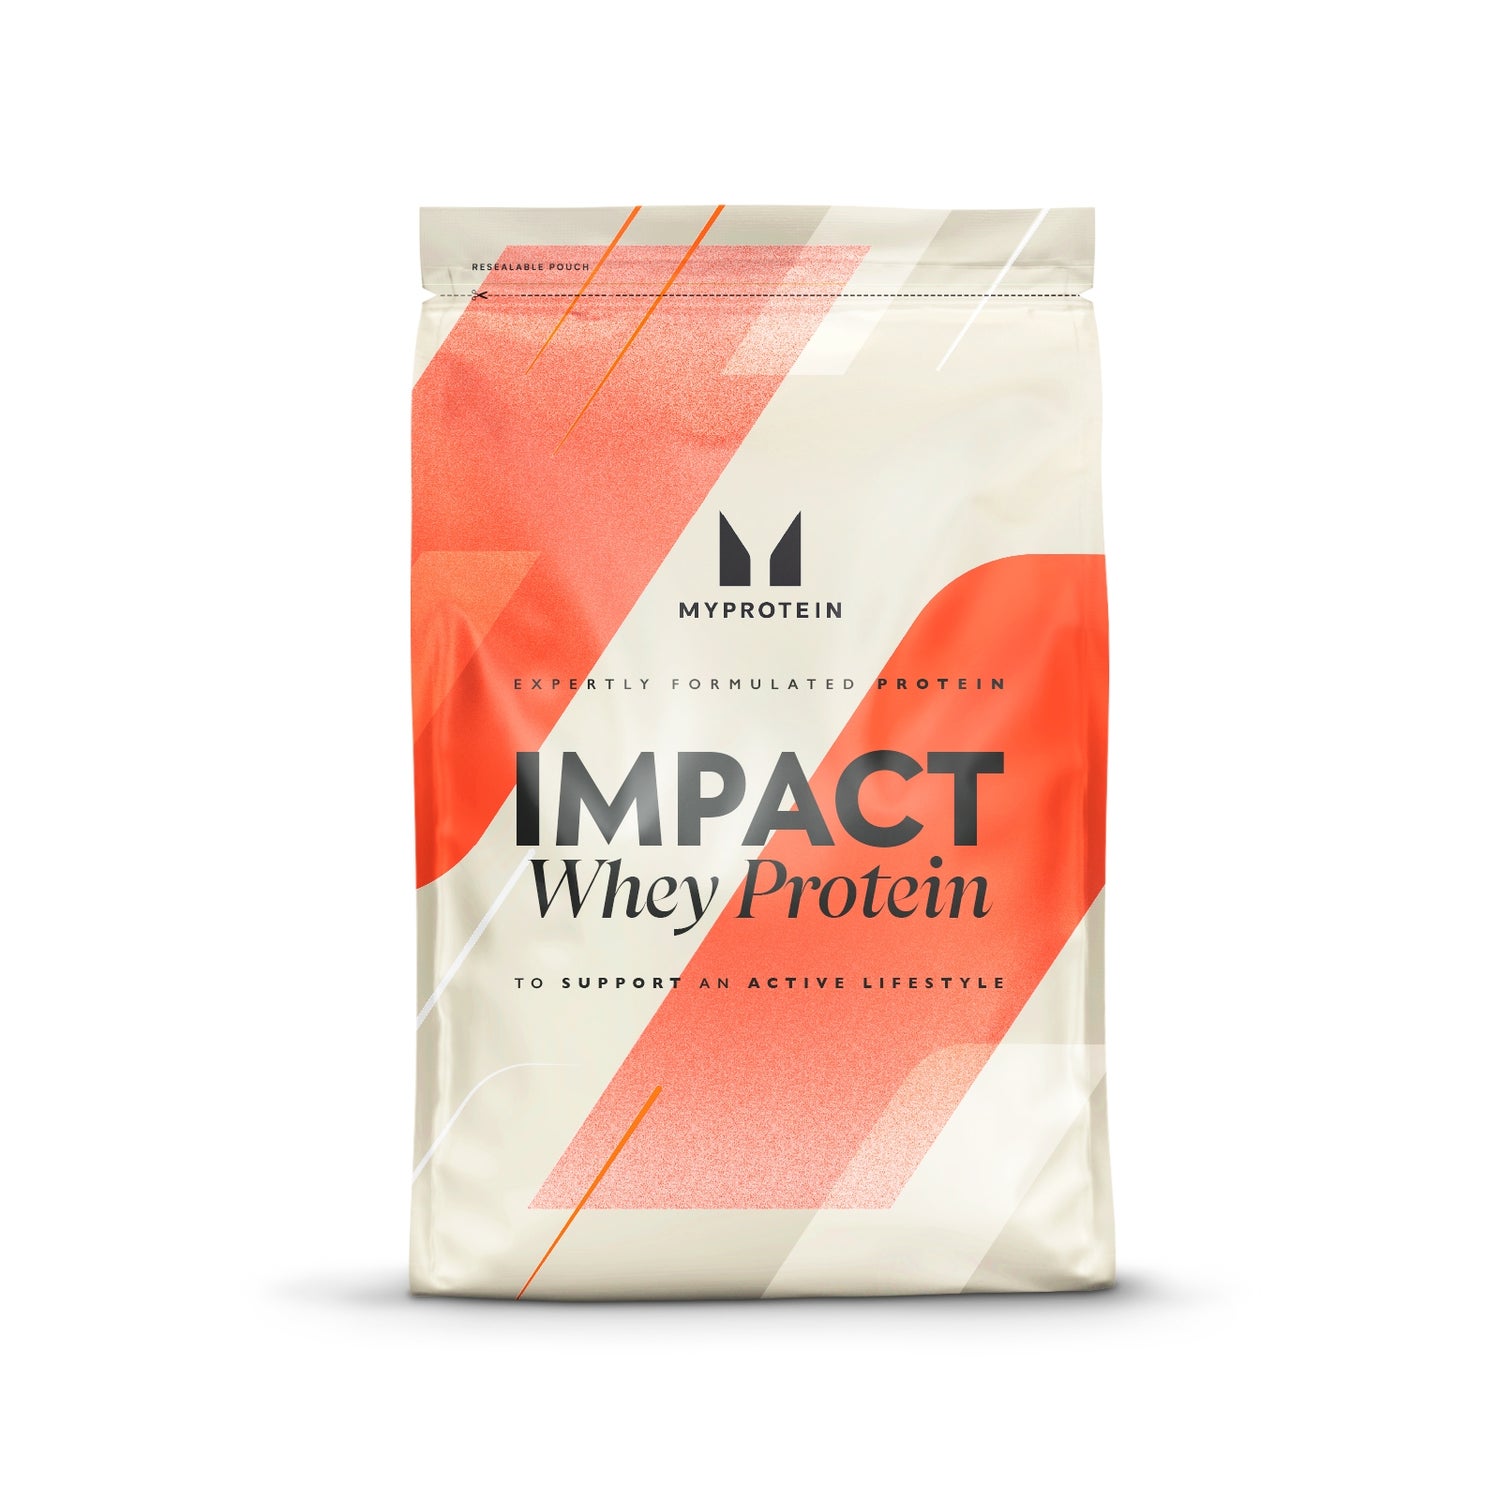 Vassleprotein - Impact Whey Protein - 1kg - Banana